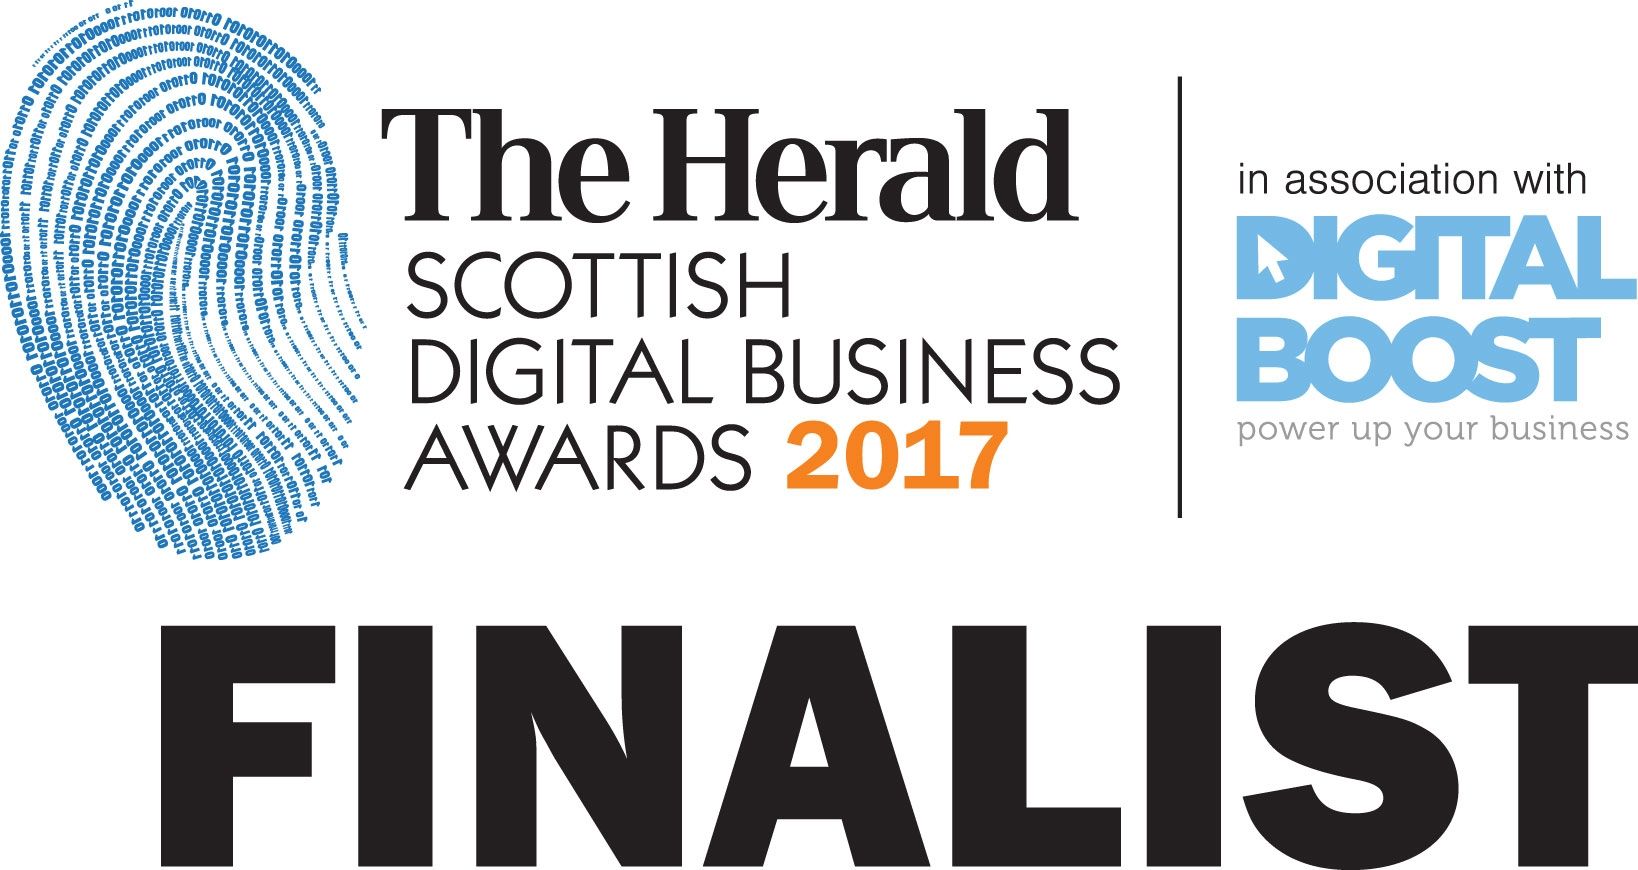 The Herald Scottish Digital Business Awards Finalist 2017